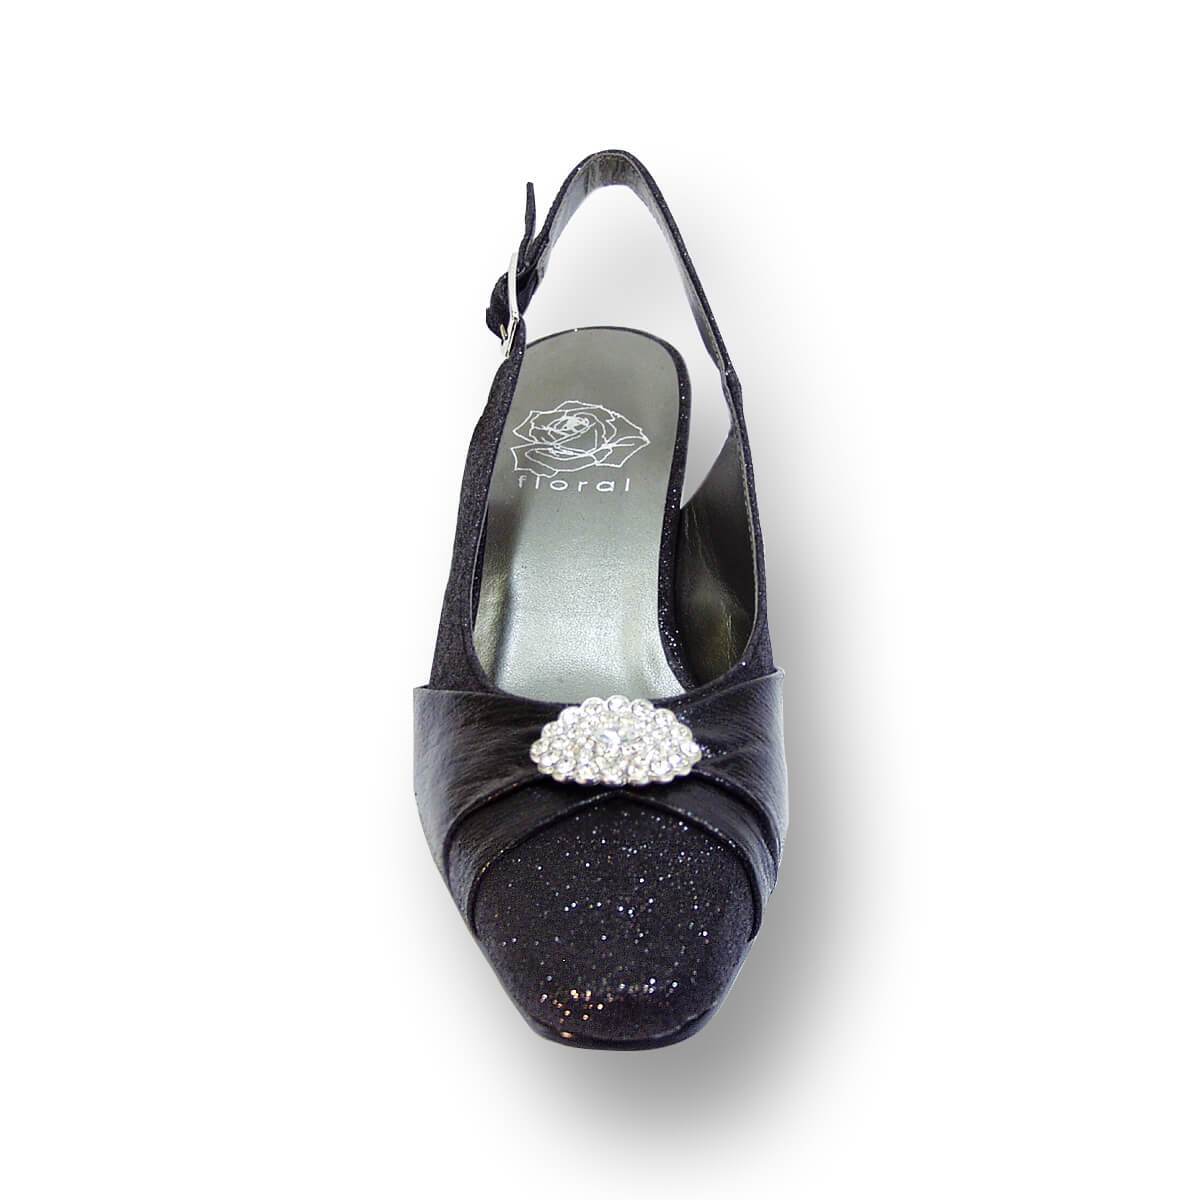 FLORAL Elaine Women's Wide Width Slingback Dress Shoes